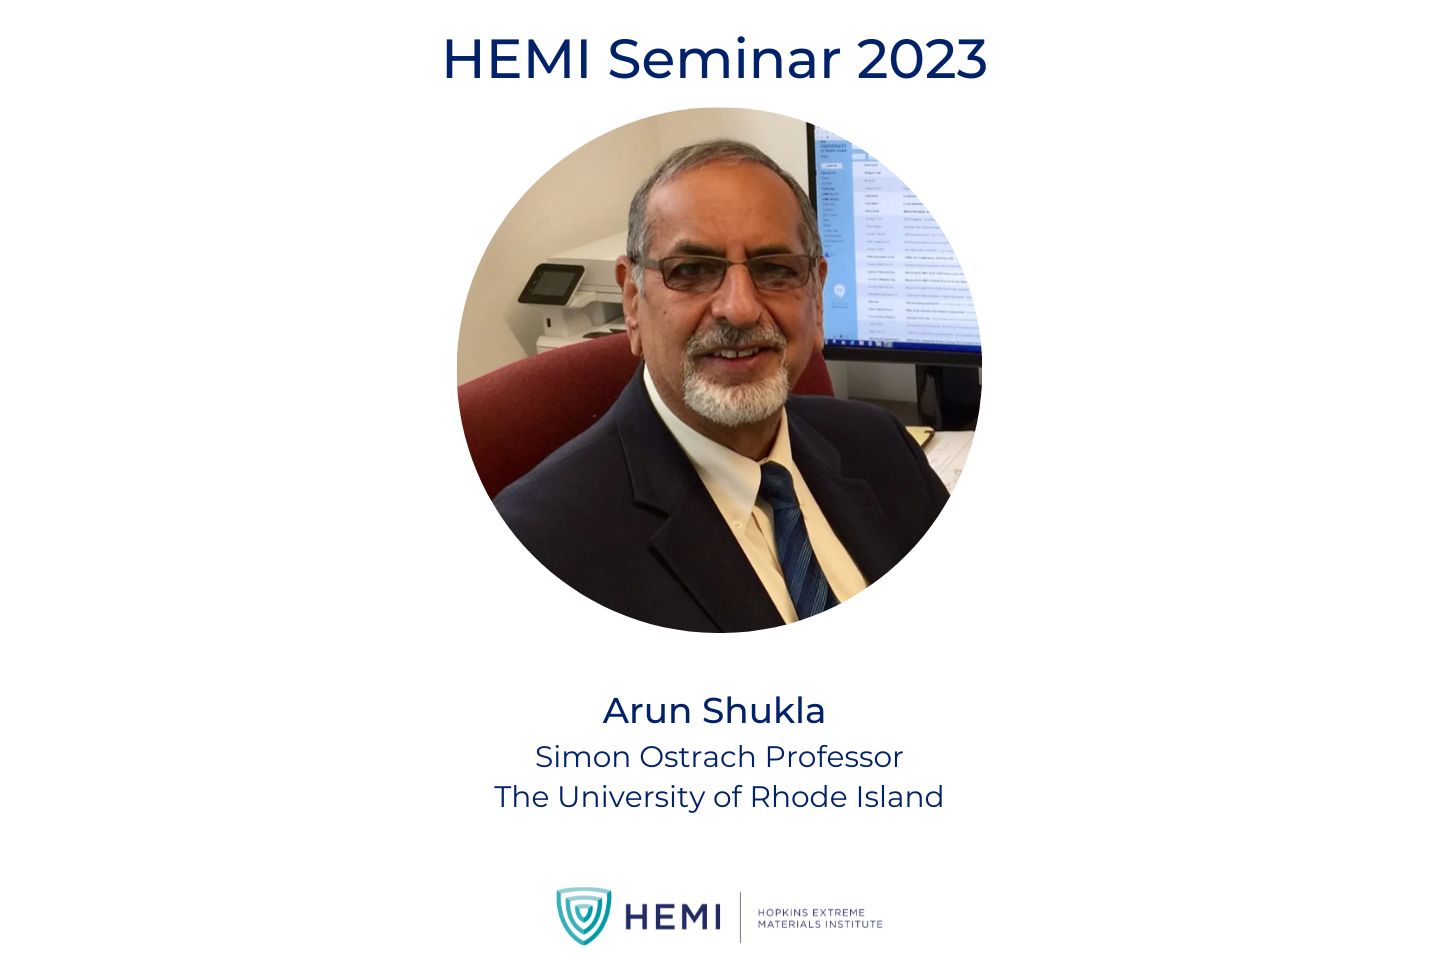 Arun Shukla headshot and HEMI logo with text: "HEMI Seminar 2023, Arun Shukla, Simon Ostrach Professor, The University of Rhode Island"